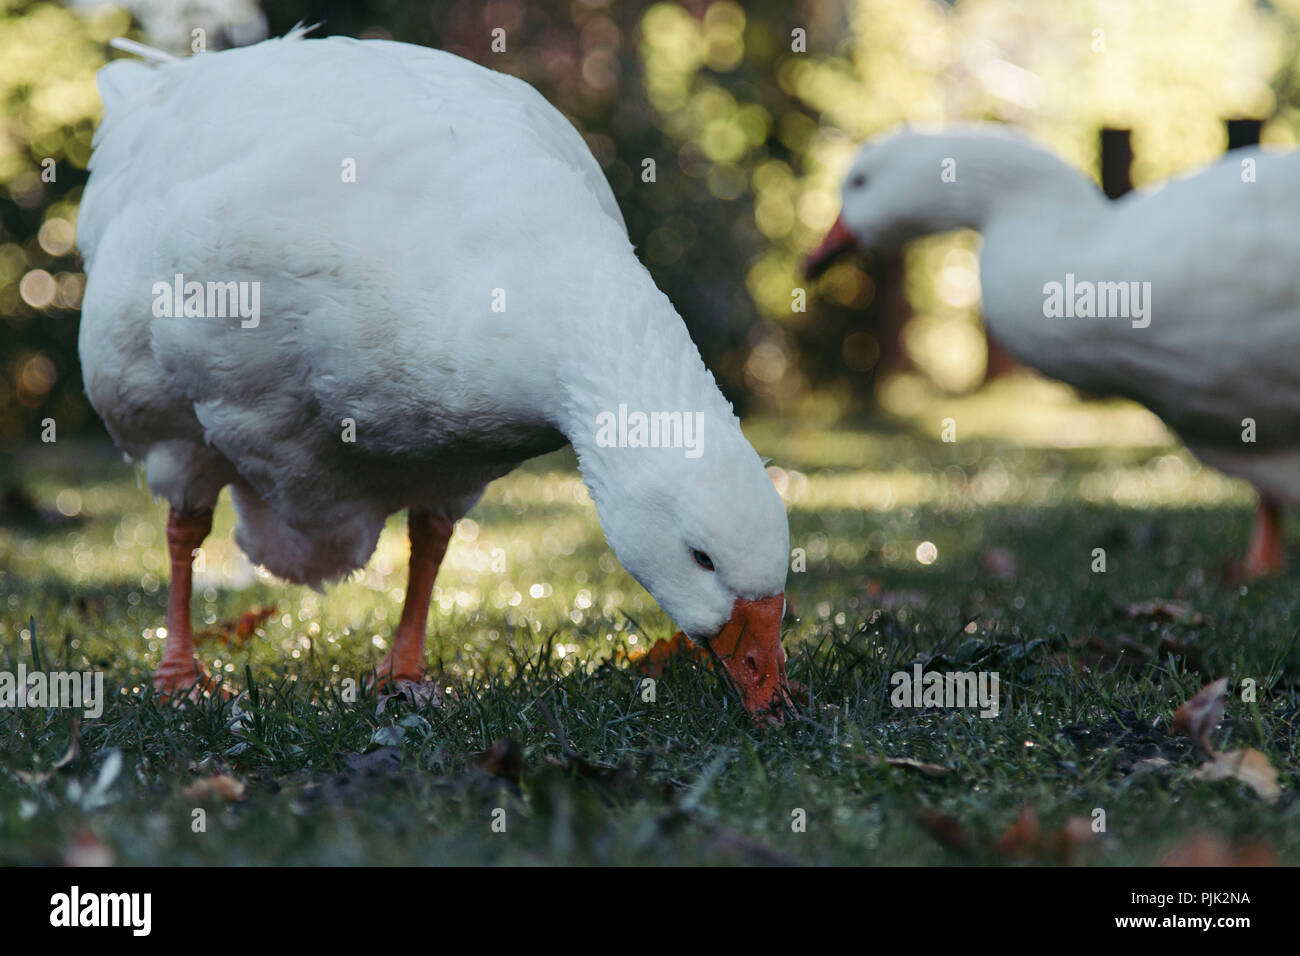 Geese at feed intake, Stock Photo